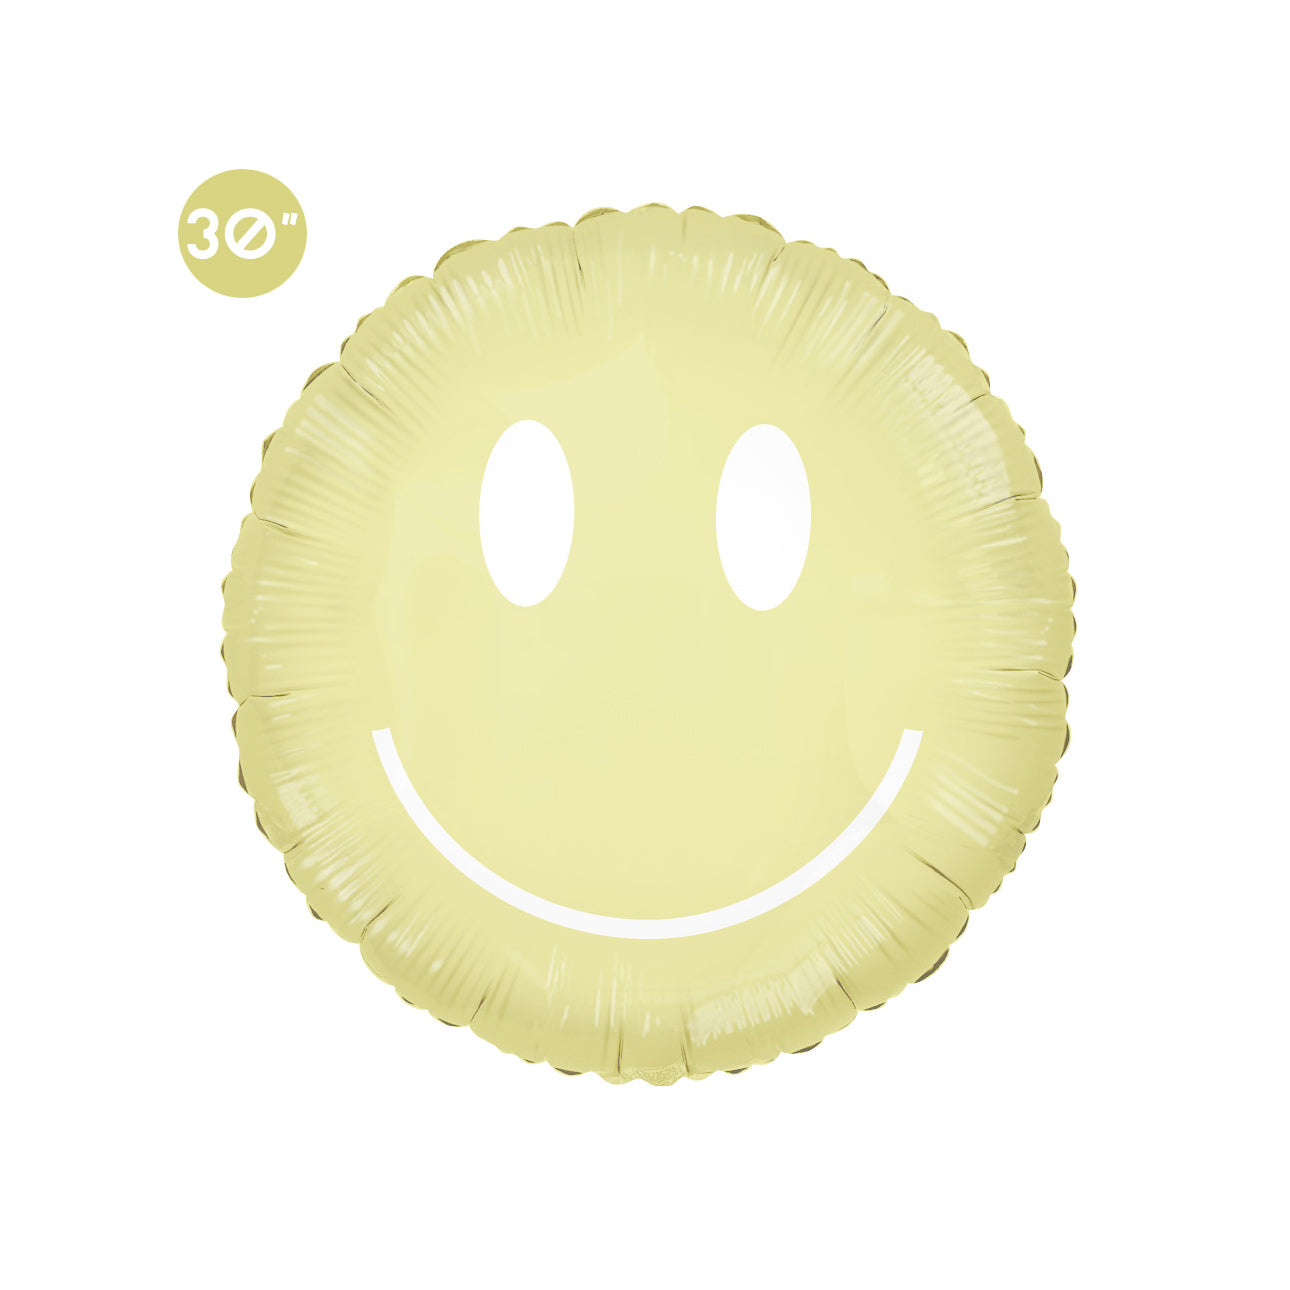 Citrus Yellow Groovy Smiley Face Foil Balloon 30" - Retro Funky Hippie Party Decor